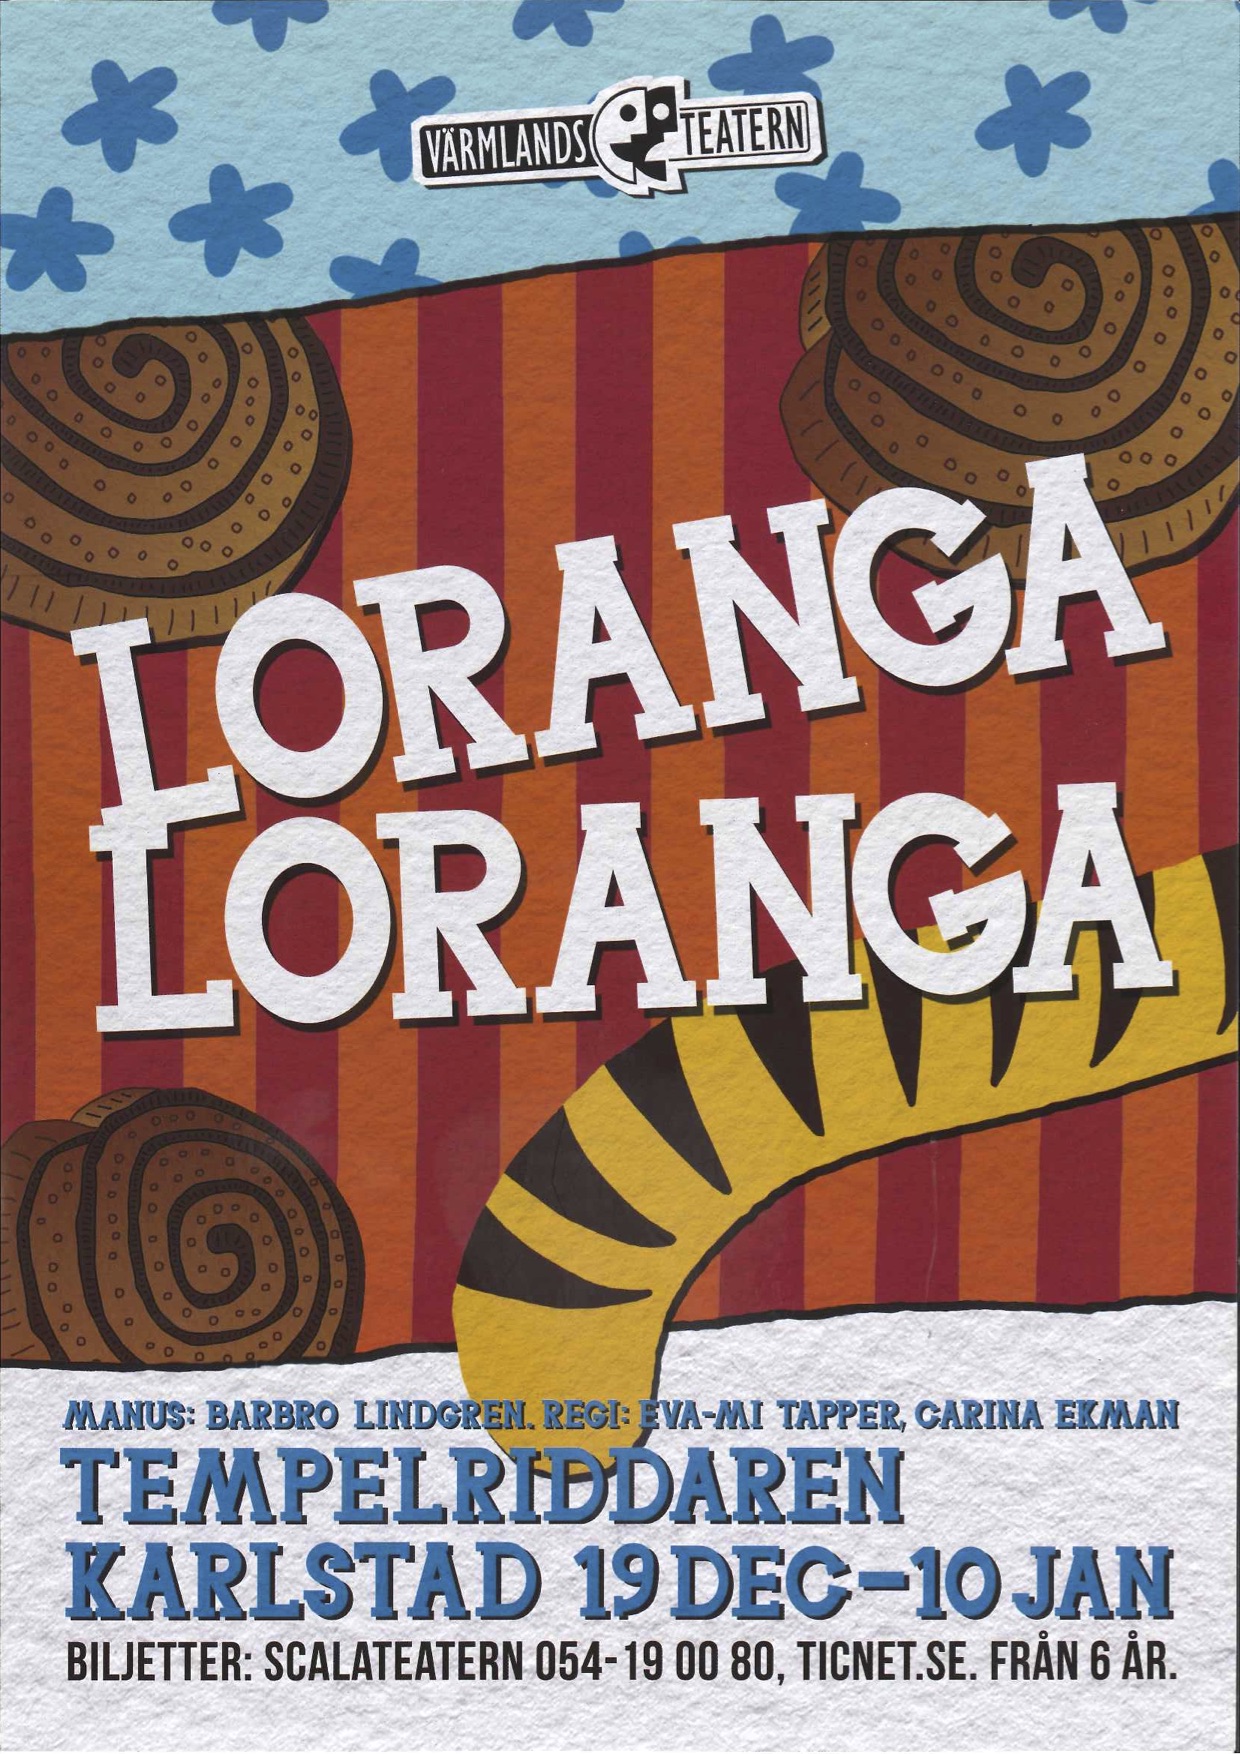 Loranga, Loranga